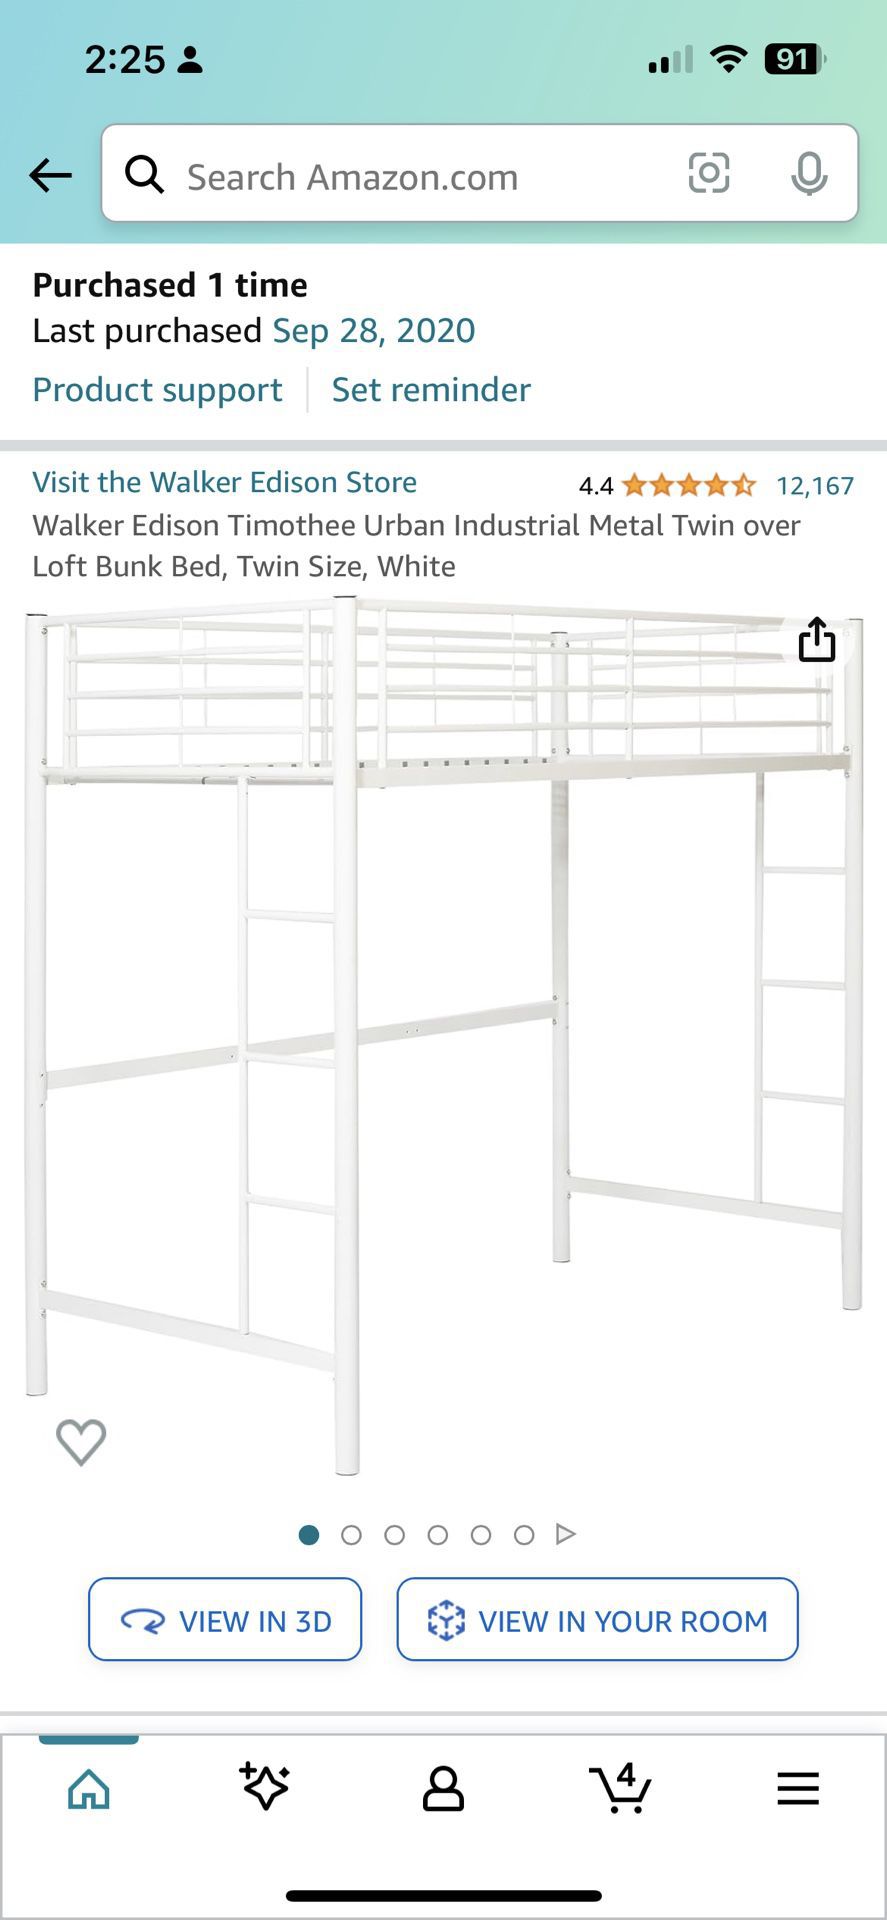 White Loft Bed, Twin, Sturdy Metal